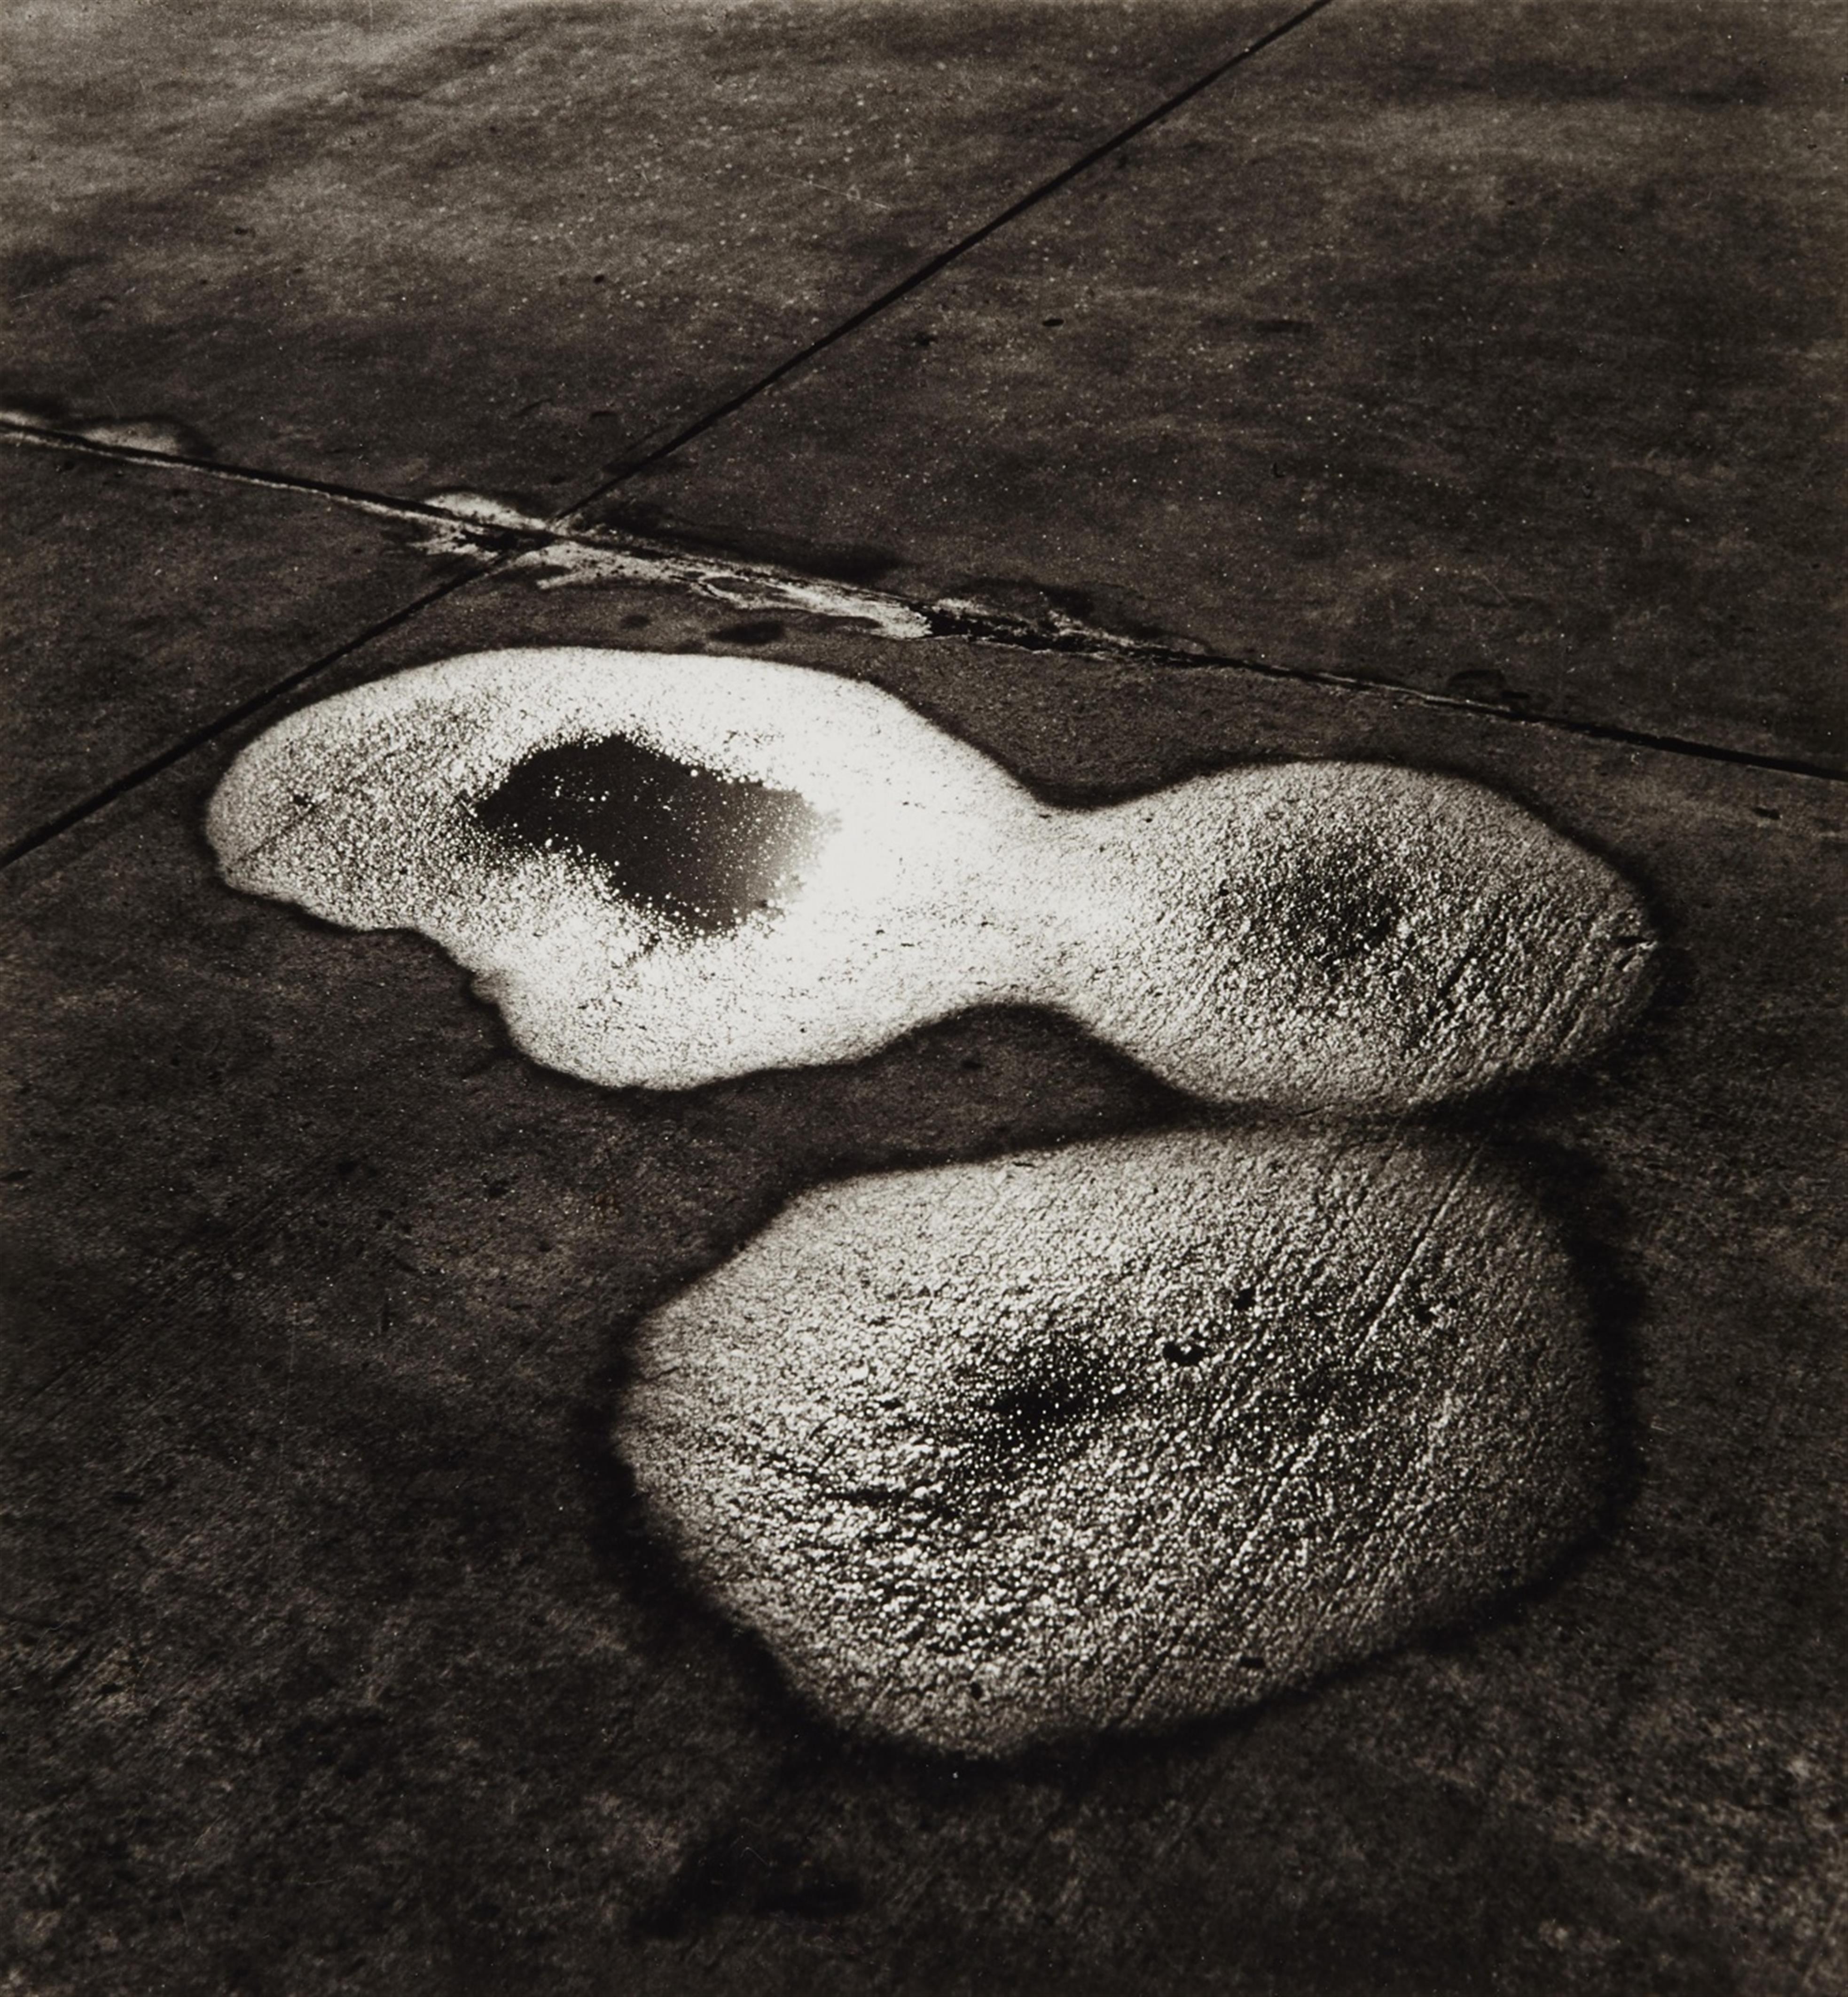 György Kepes - Light Reflection (Puddles on Pavement) - image-1